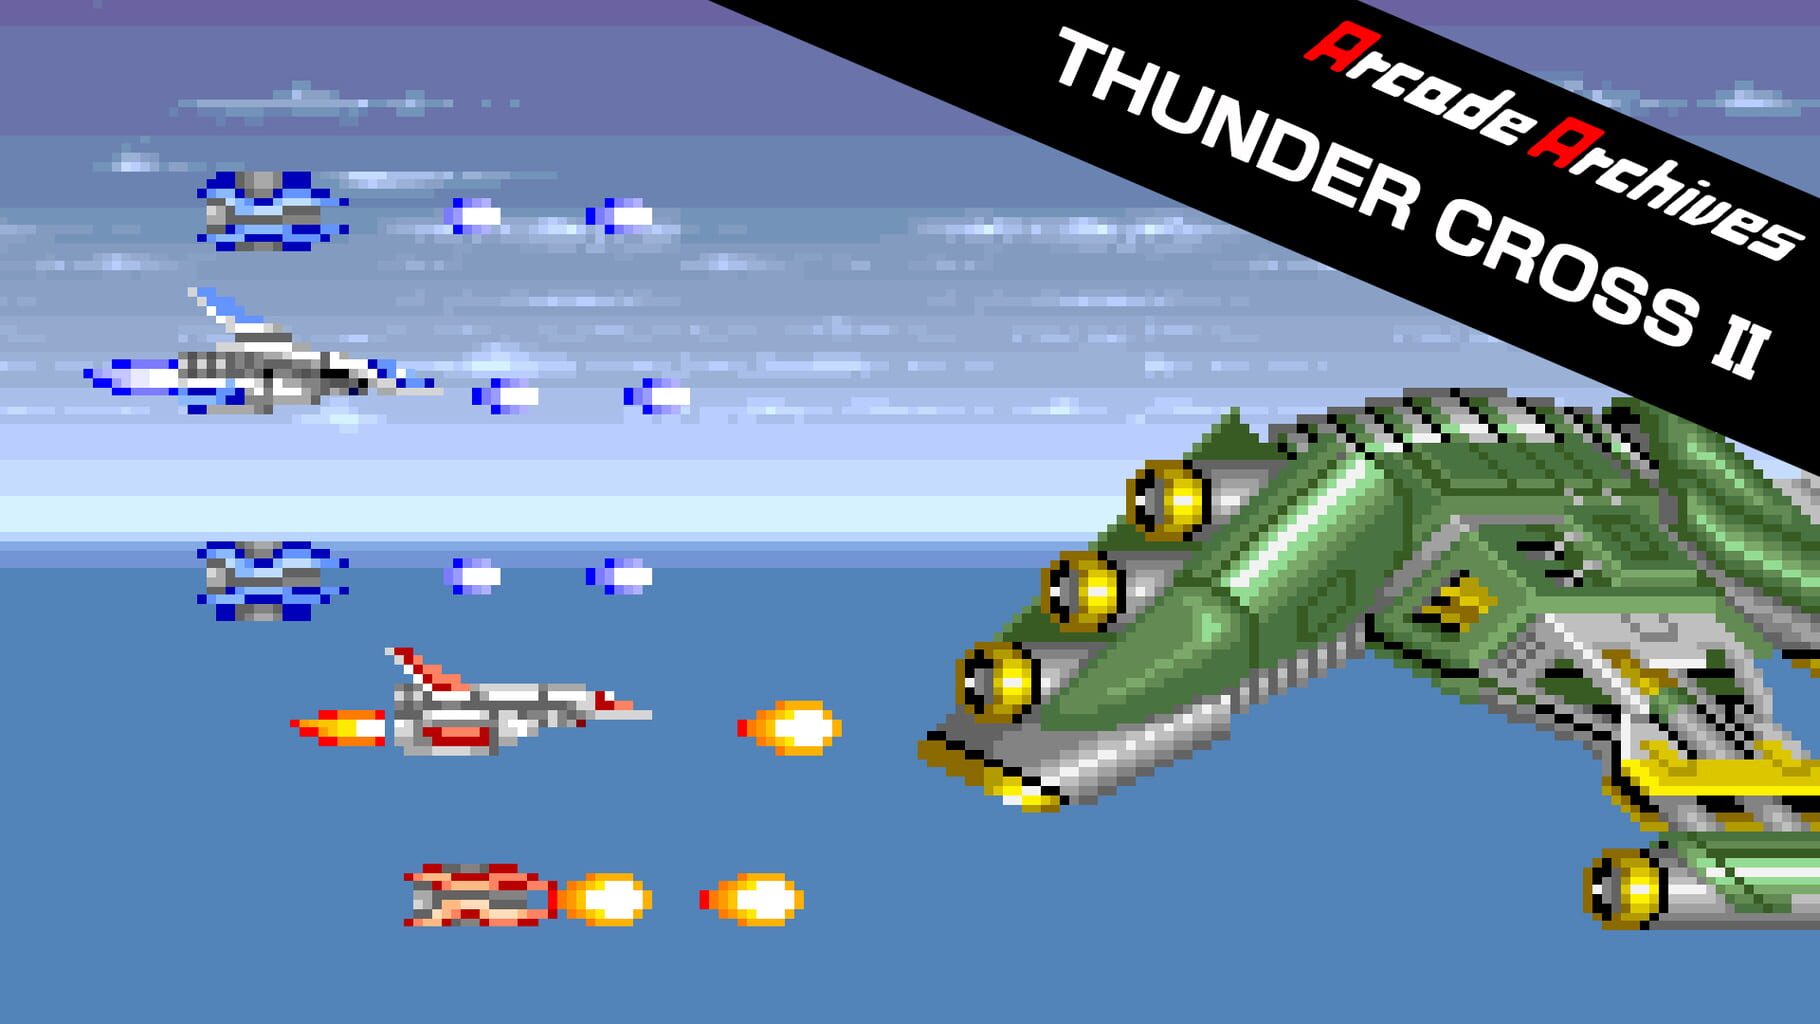 Arcade Archives: Thunder Cross II artwork